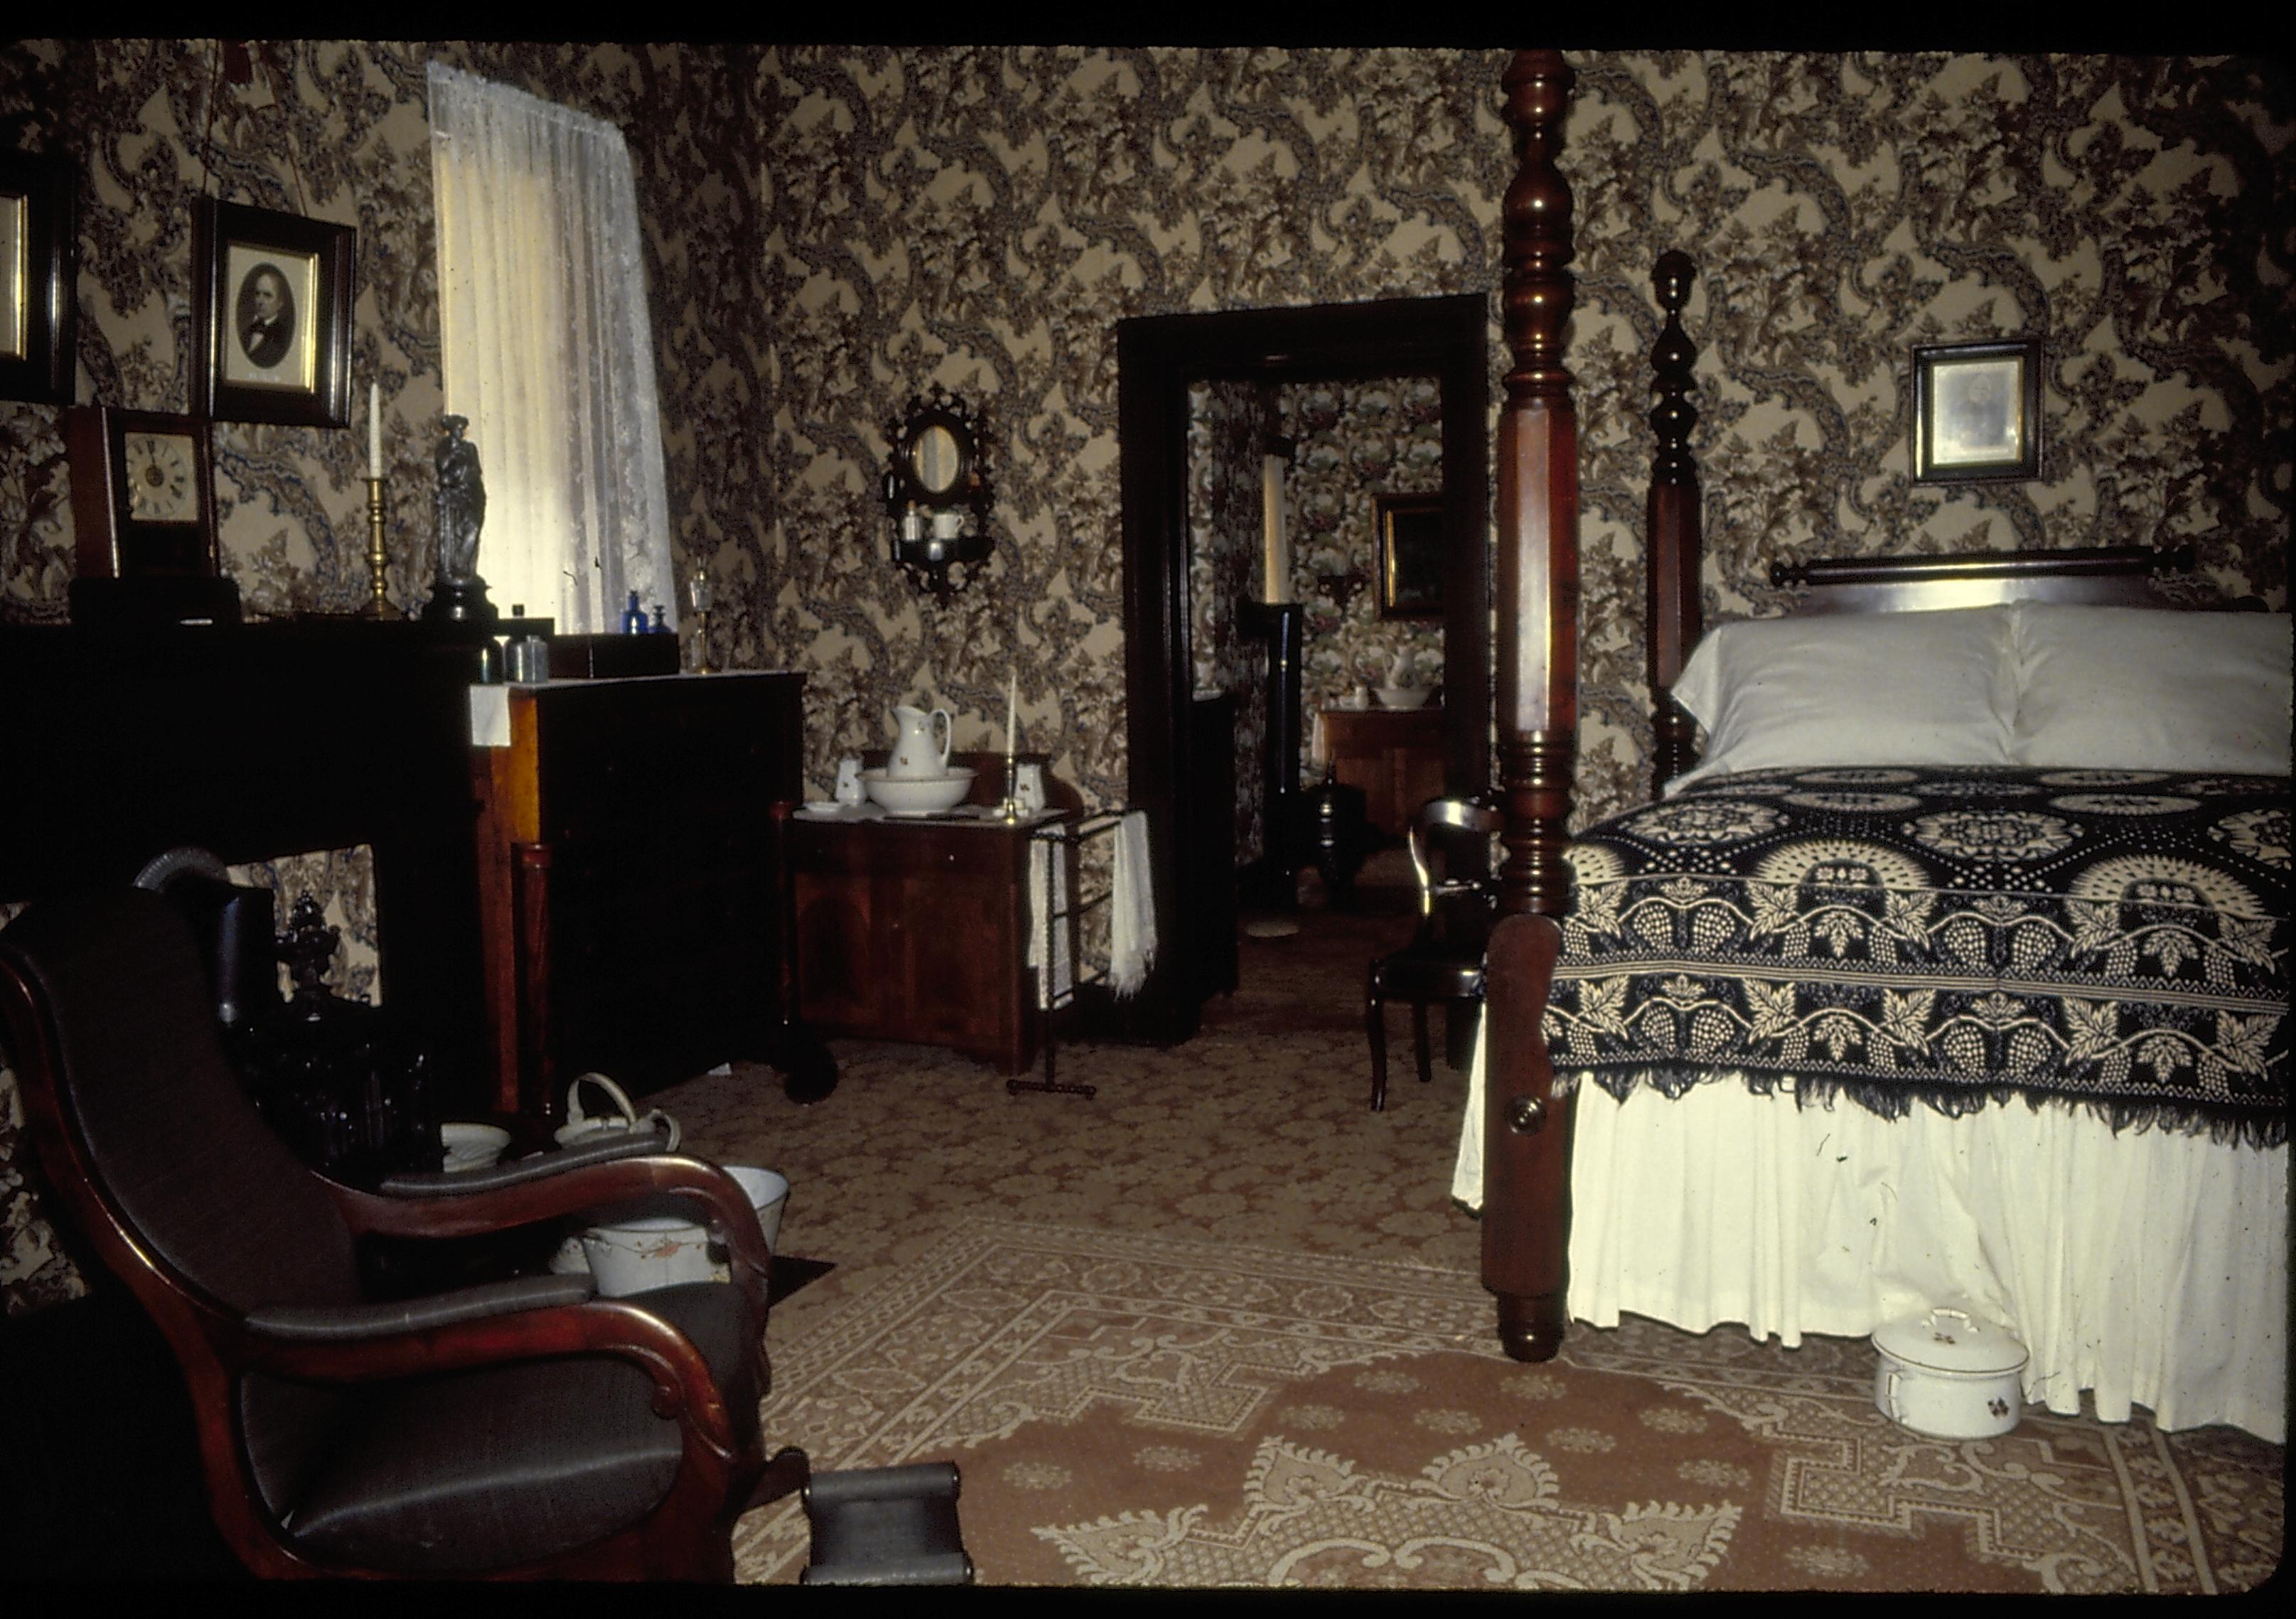 Lincoln's Bedroom 201, 3B.1 Lincoln Home, Bedroom, bed, rocking chair, doorway